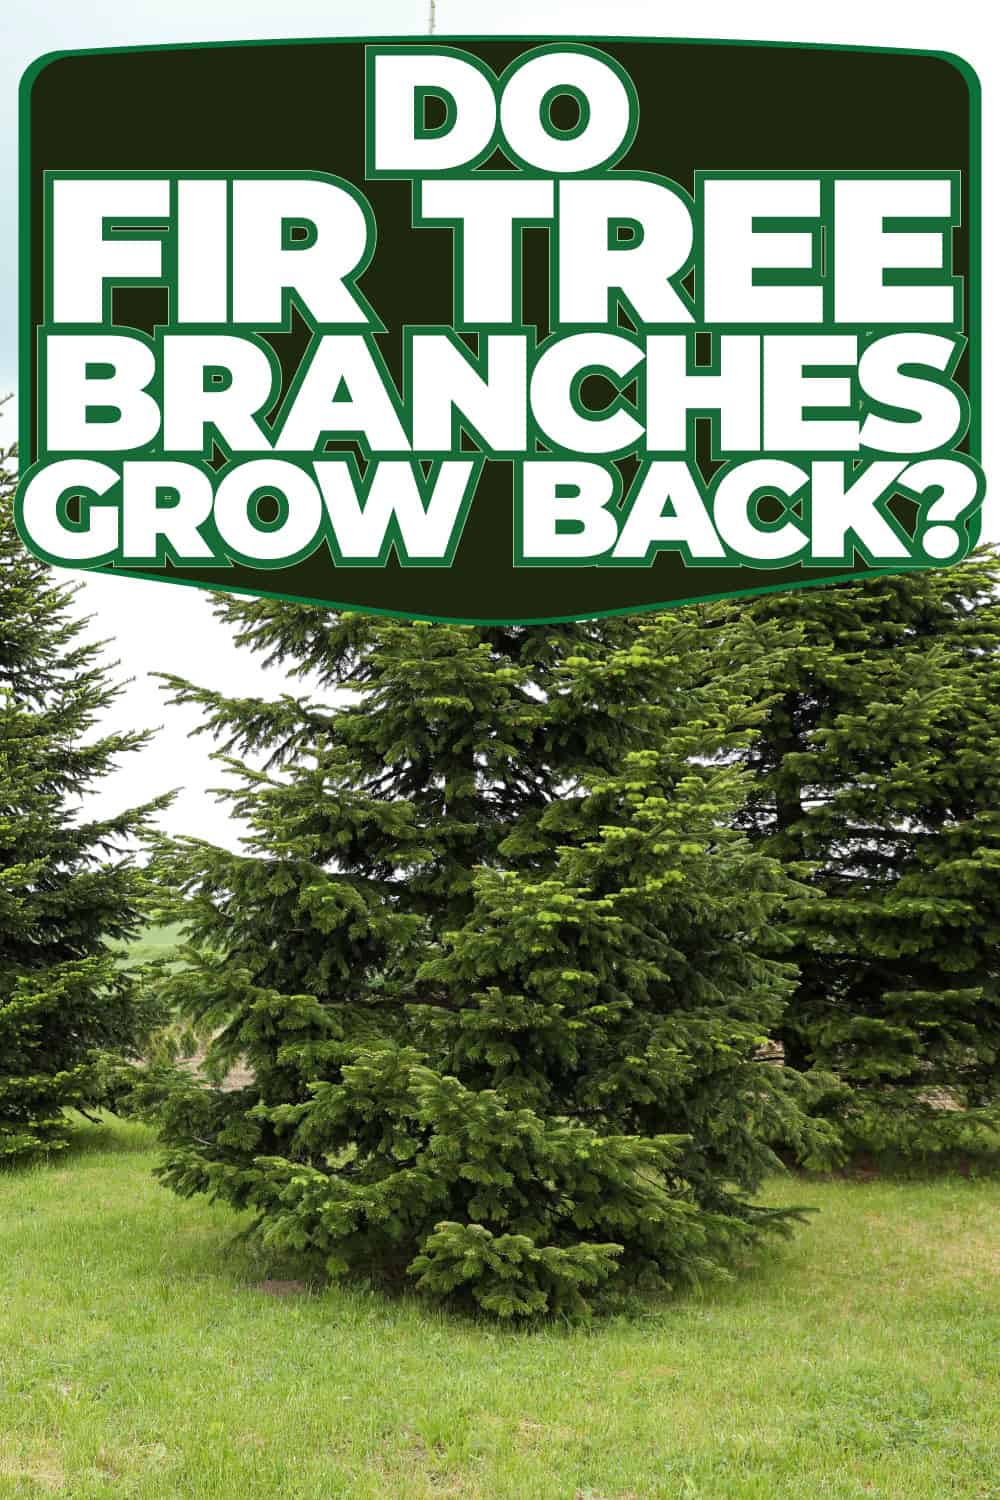 Do Fir Tree Branches Grow Back?